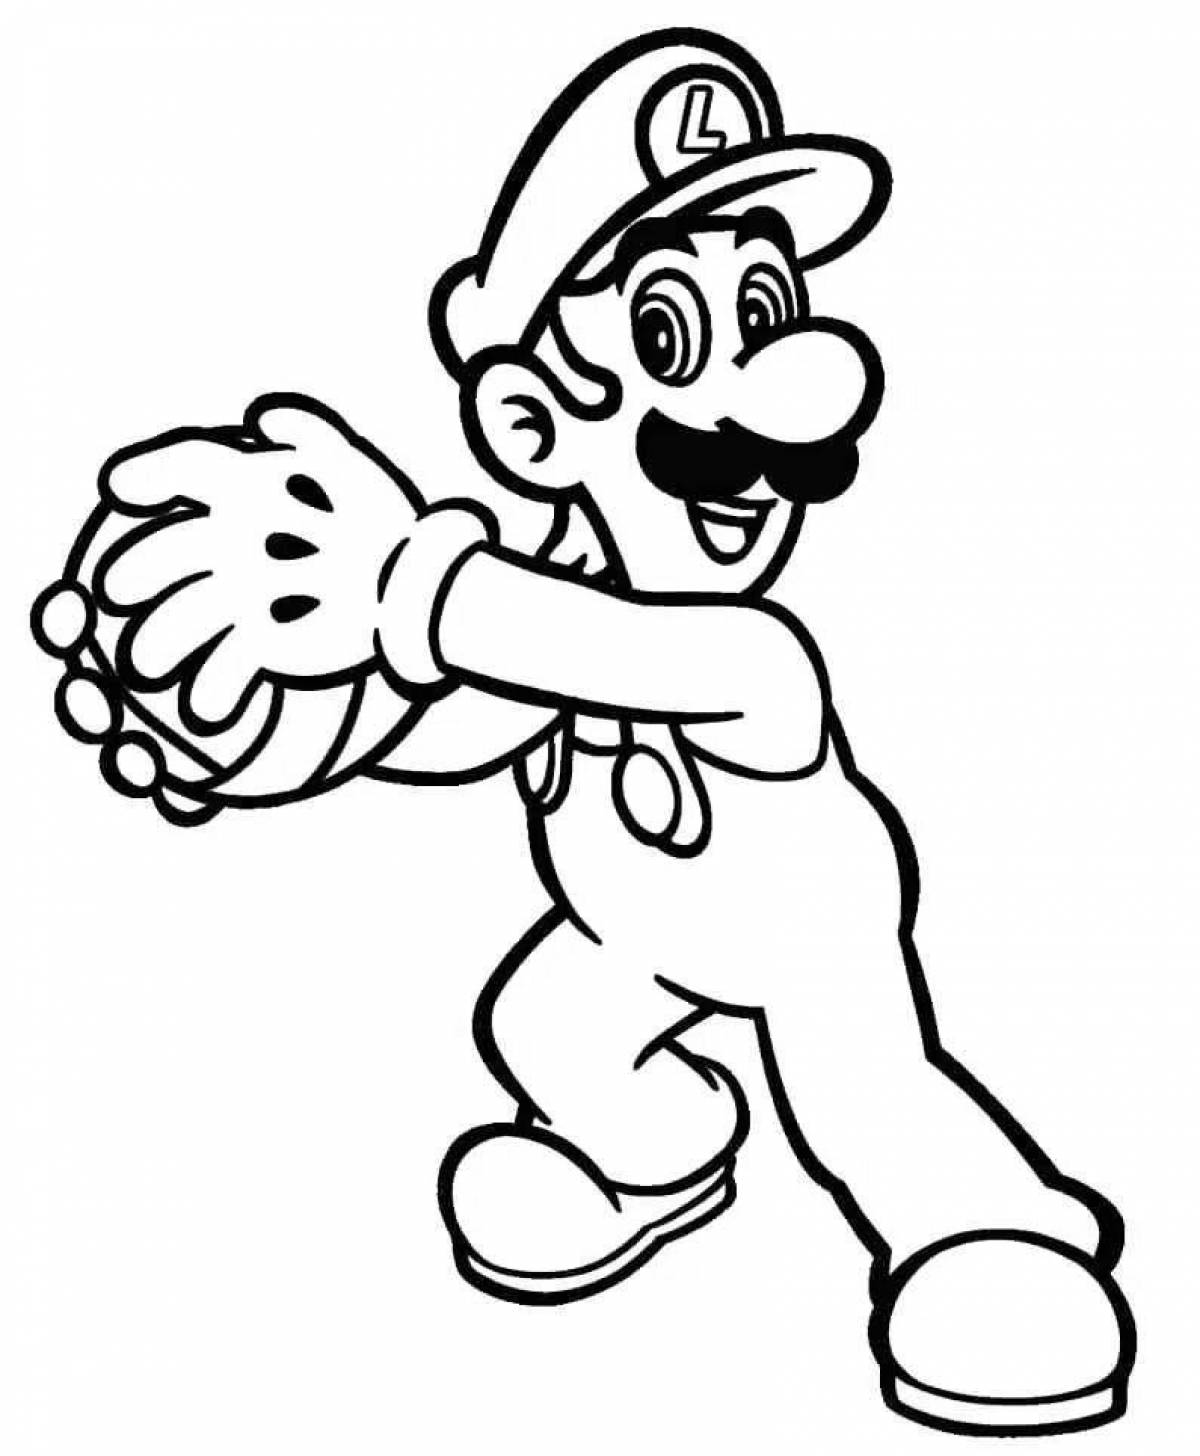 Luigi #16